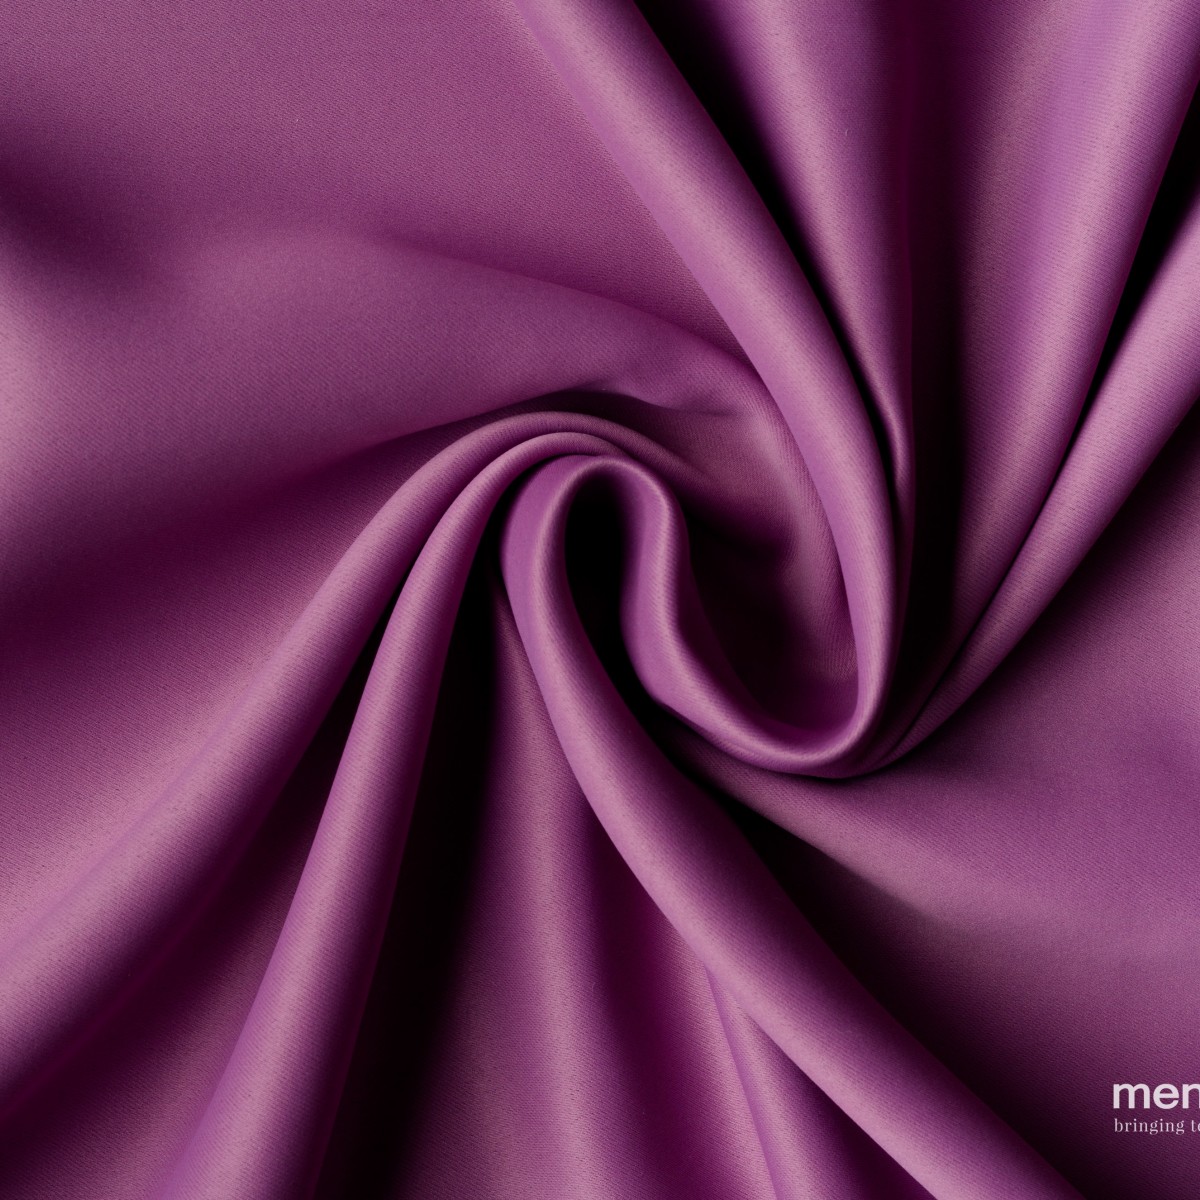 Draperii Mendola fabrics MDF-149-BLACKOUT. Conține culorile: Violet, Violet-Mov, Violet, Violet Semnal, Violet, Violet Erica, Portocaliu, Portocaliu Profund, Negru, Negru Închis